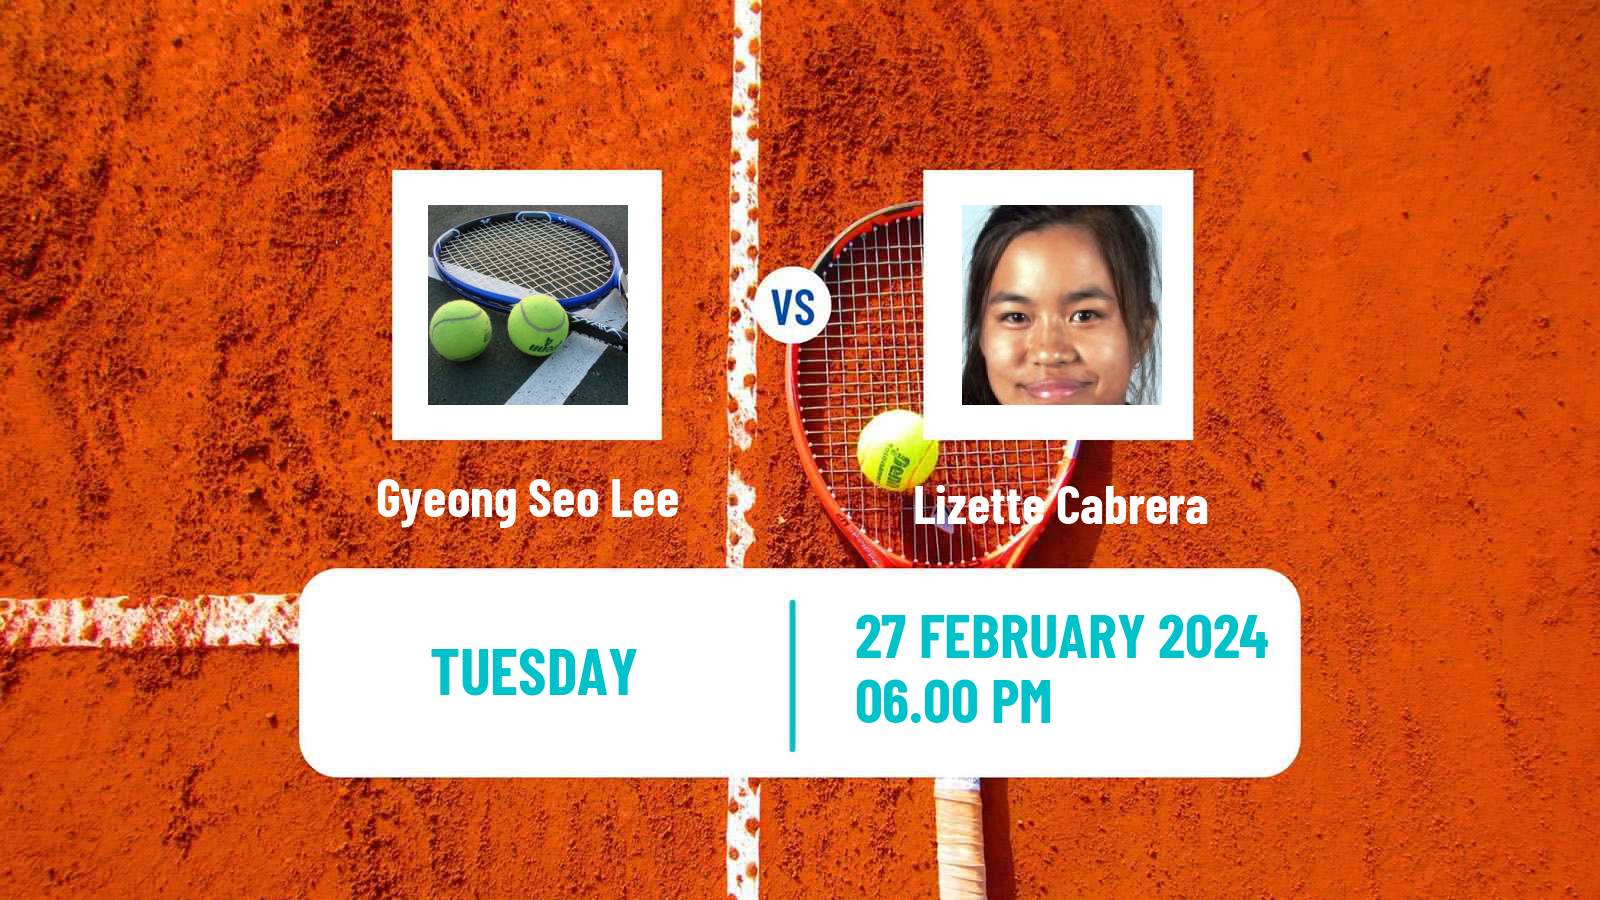 Tennis ITF W35 Traralgon 2 Women Gyeong Seo Lee - Lizette Cabrera